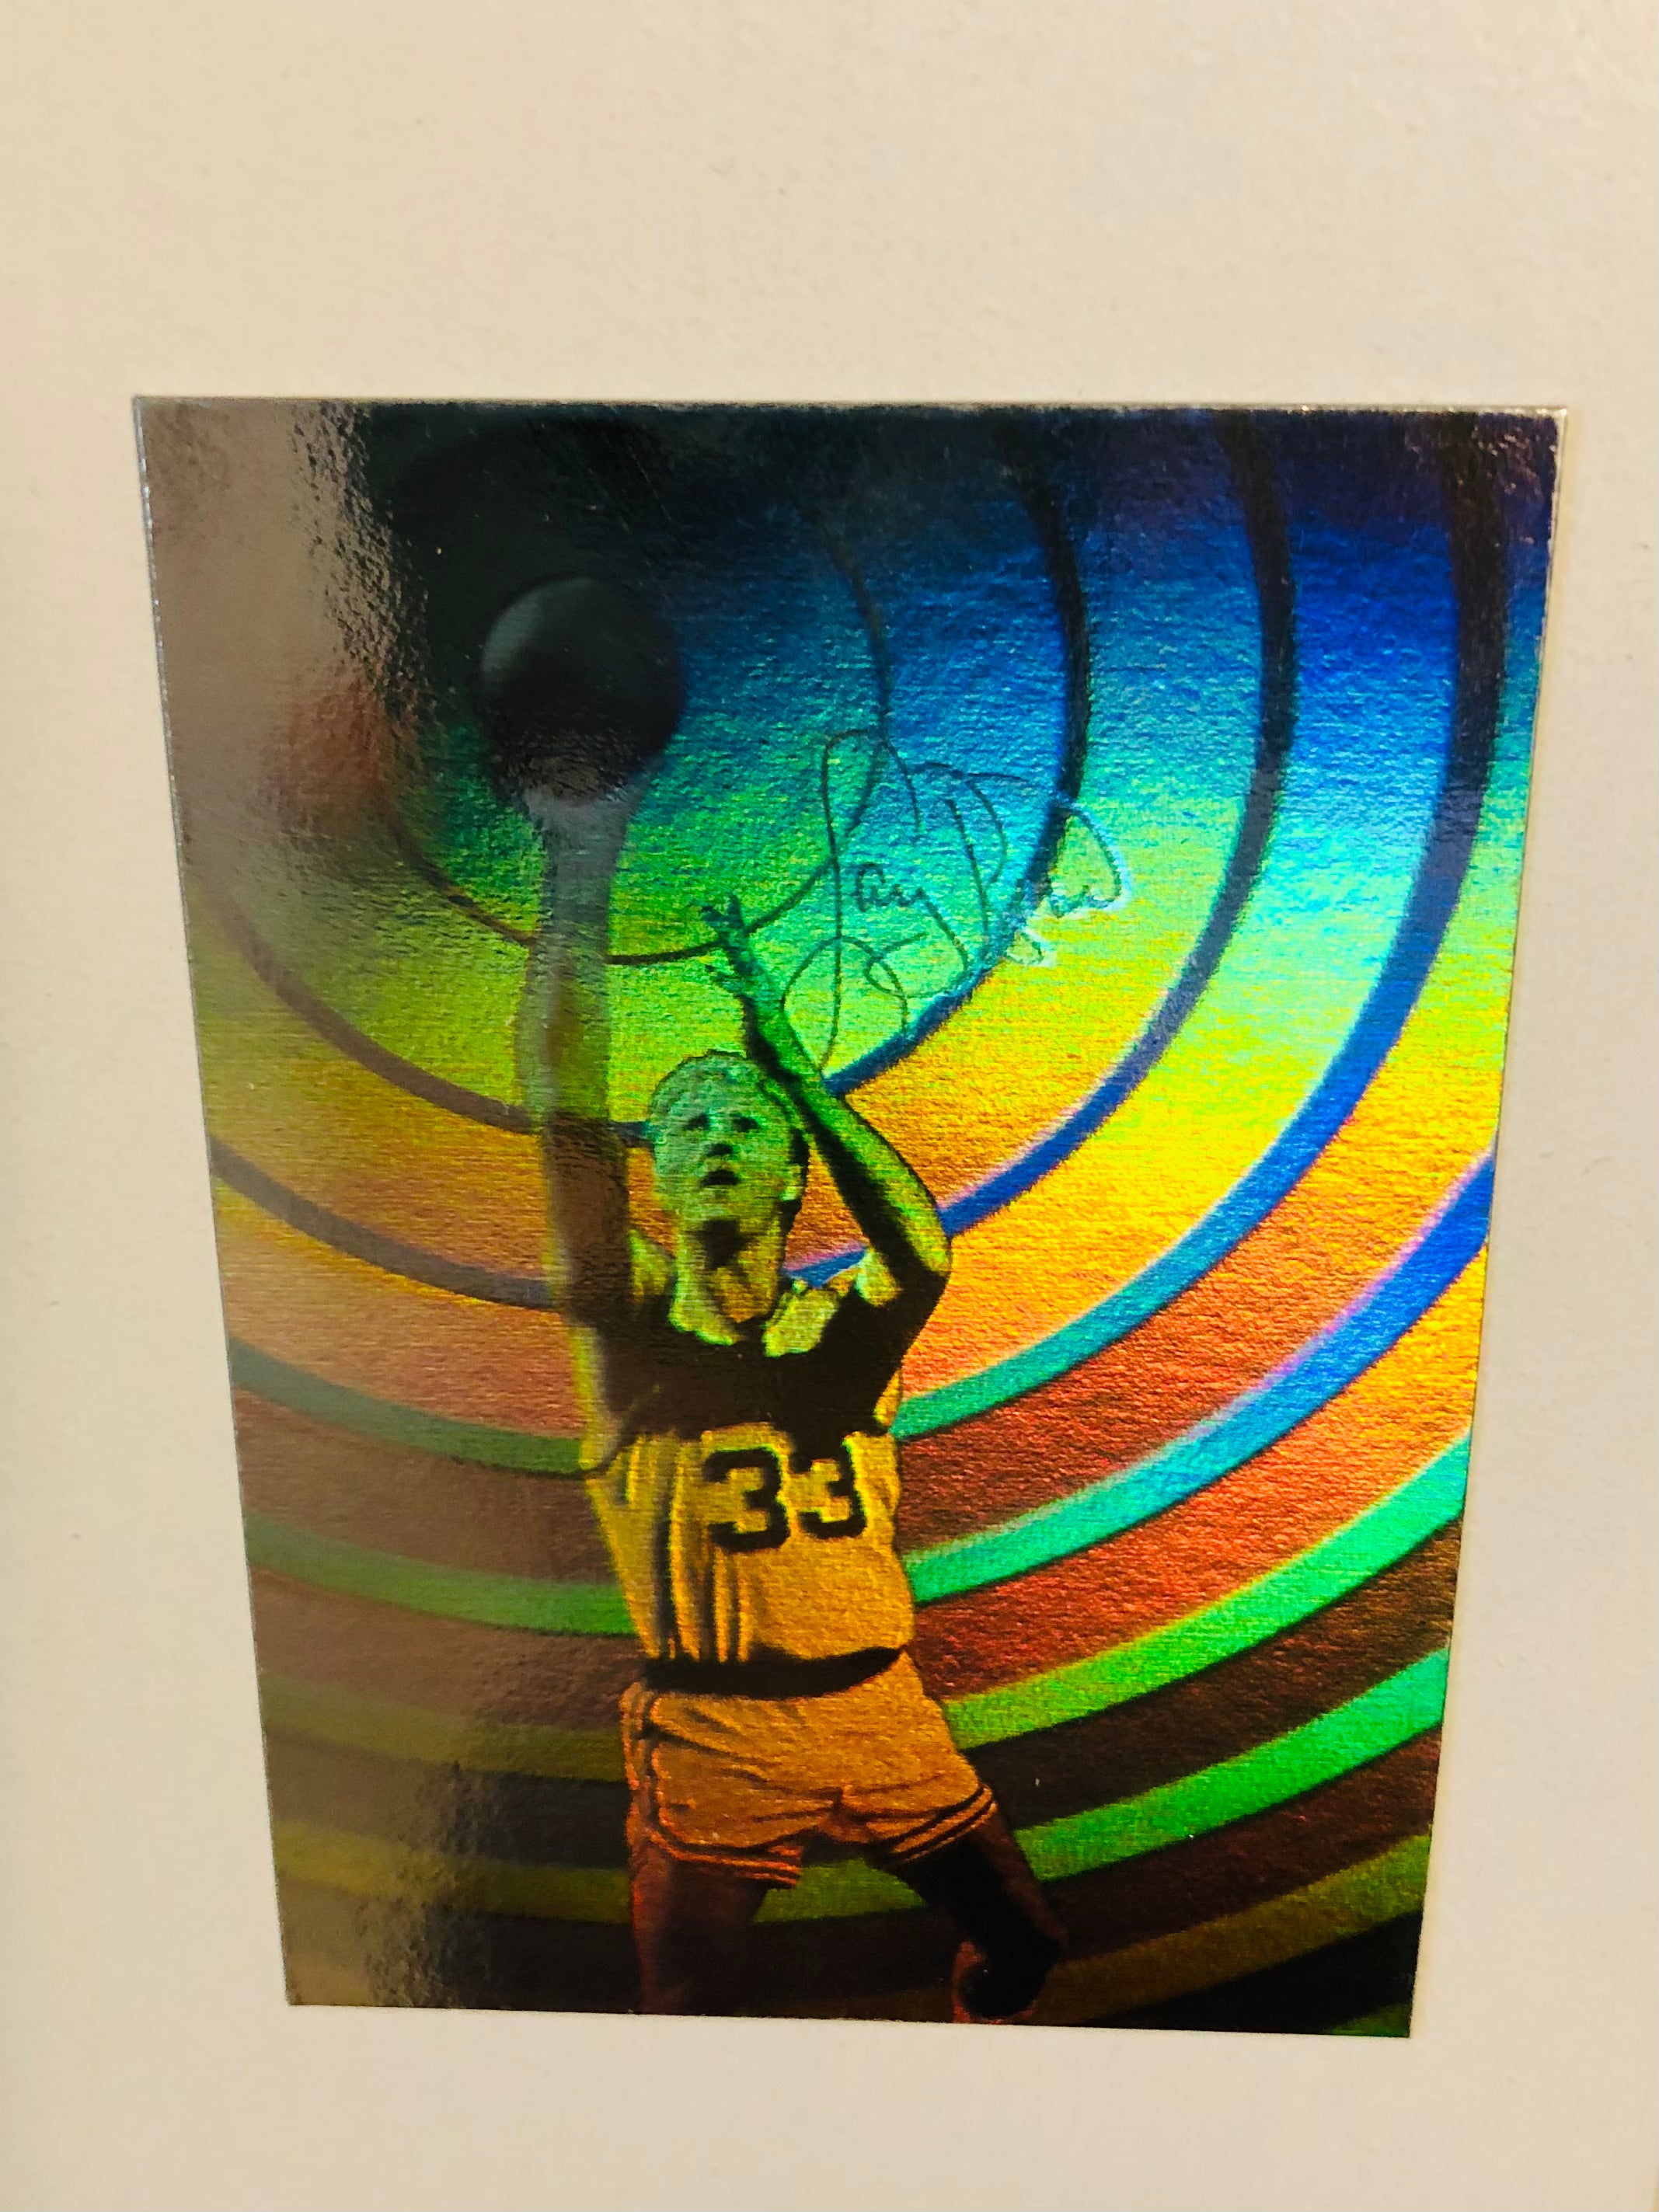 Larry Bird NBA legend rare hologram promo card